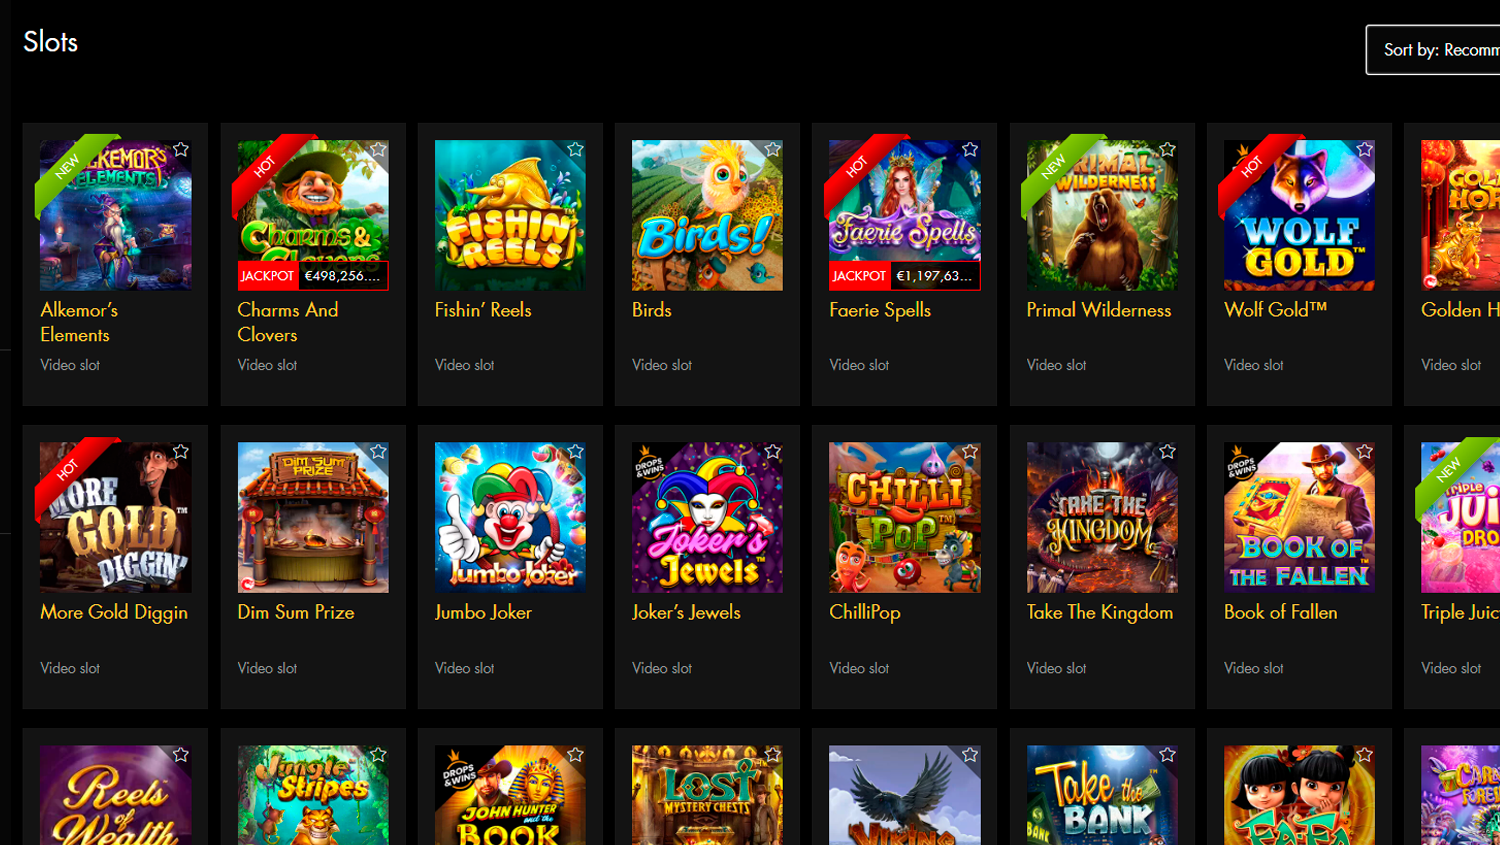 Black Diamond casino screenshot of Slots category